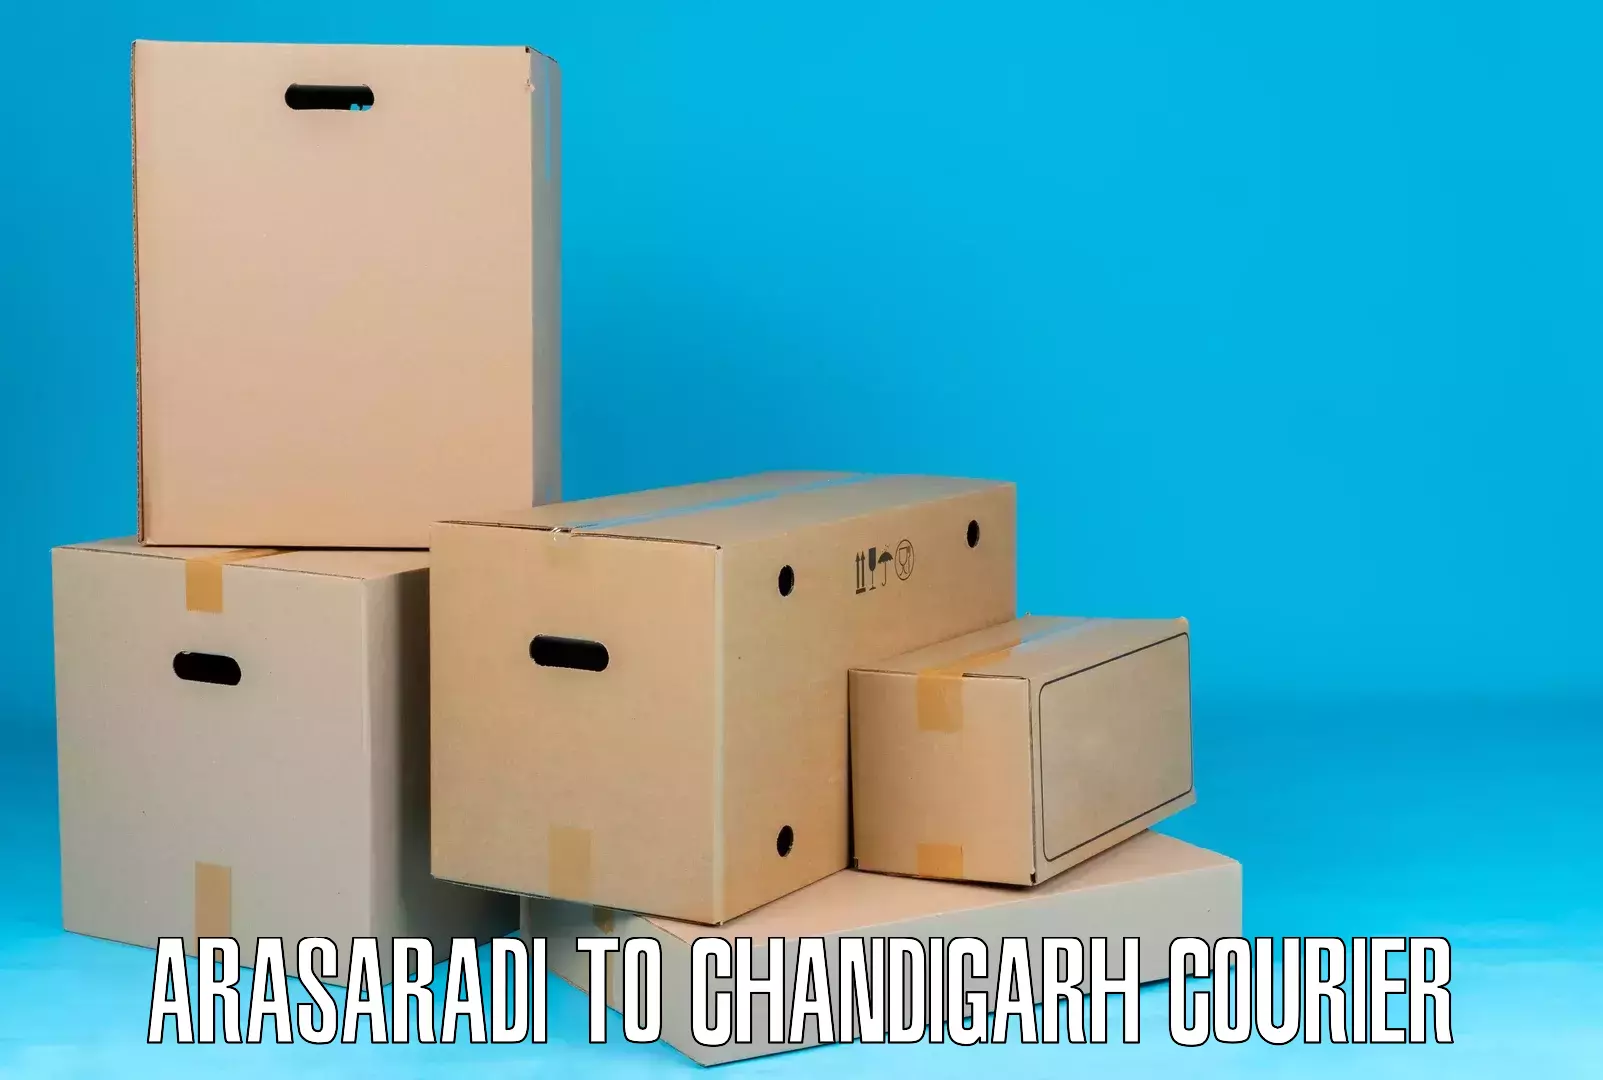 Quick booking process Arasaradi to Chandigarh